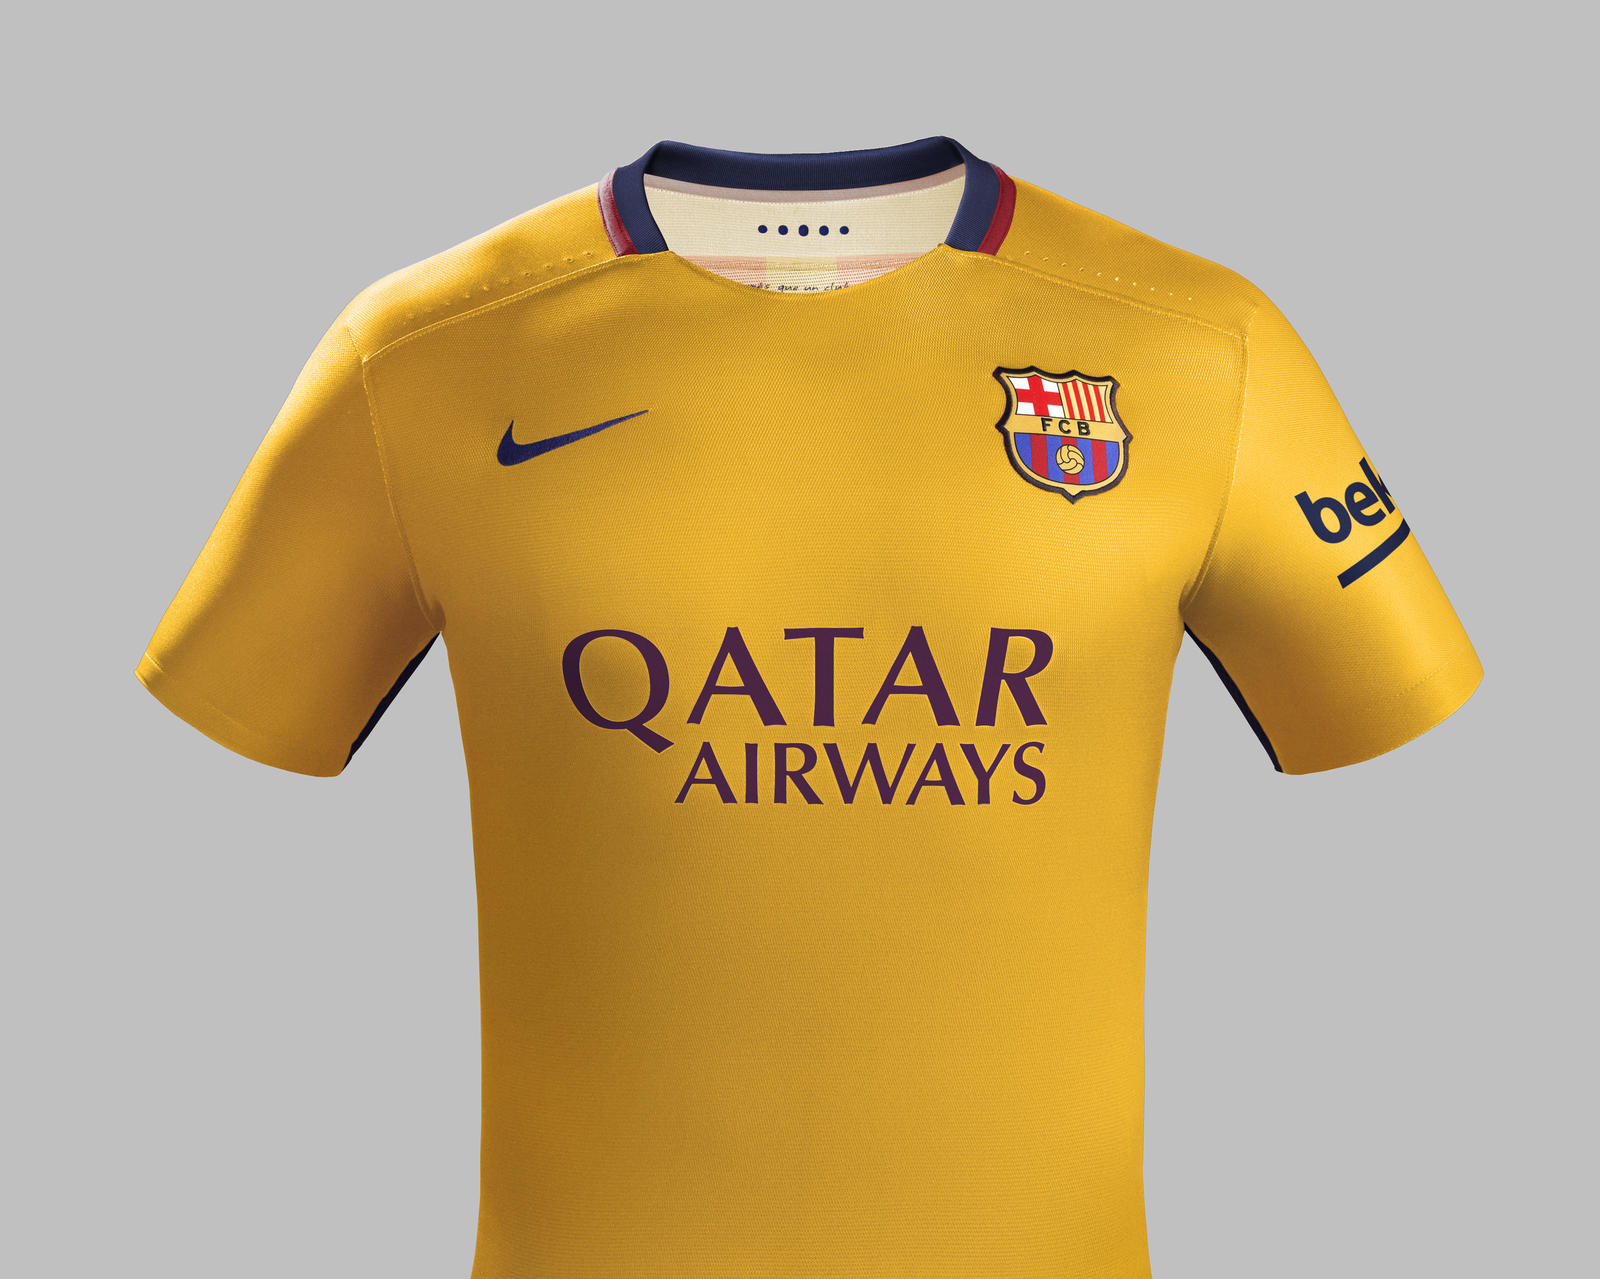 maillot extérieur FC Barcelone 2016 officiel nike football